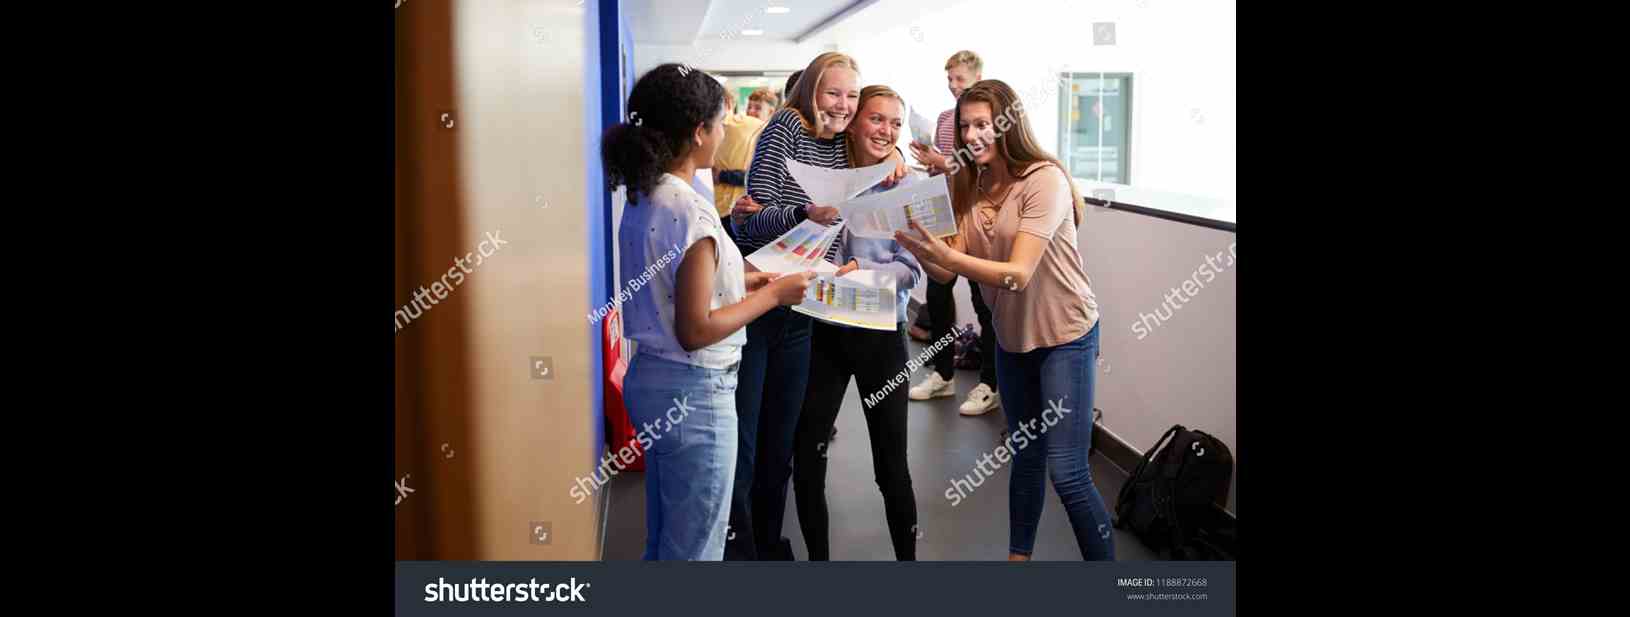 Stock Photo Excited Teenage High School Students Celebrating Exam Results In School Corridor 1188872668